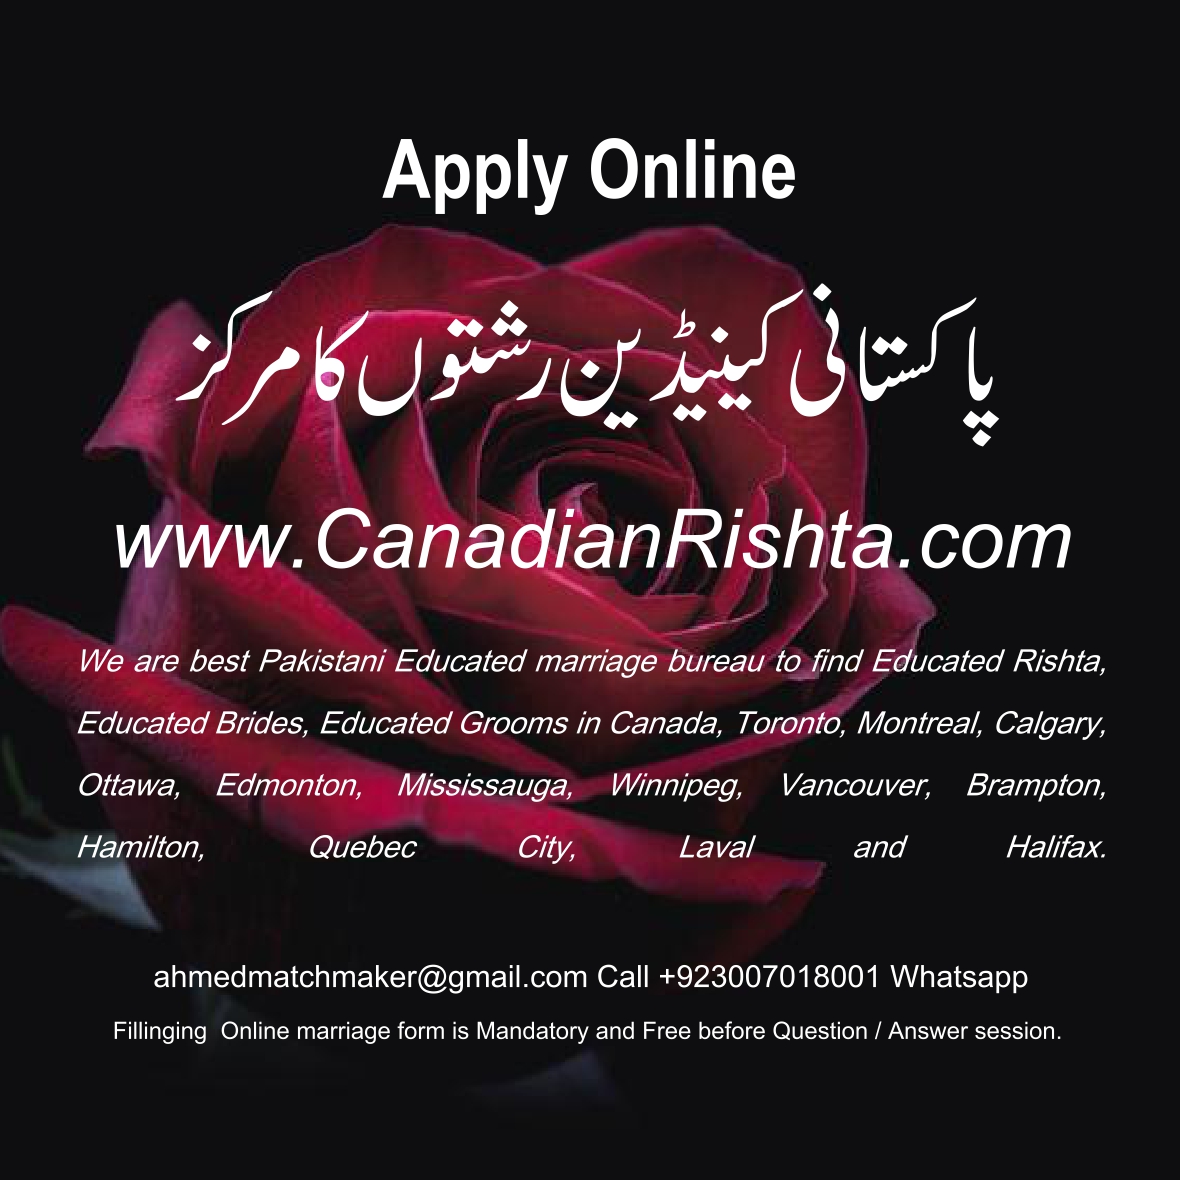 Pakistani-rishta-shaadi-marriage-bureau-Canada-Toronto-Montreal-Calgary-Ottawa-Vancouver-Brampton-Hamilton-Quebec-3.jpg